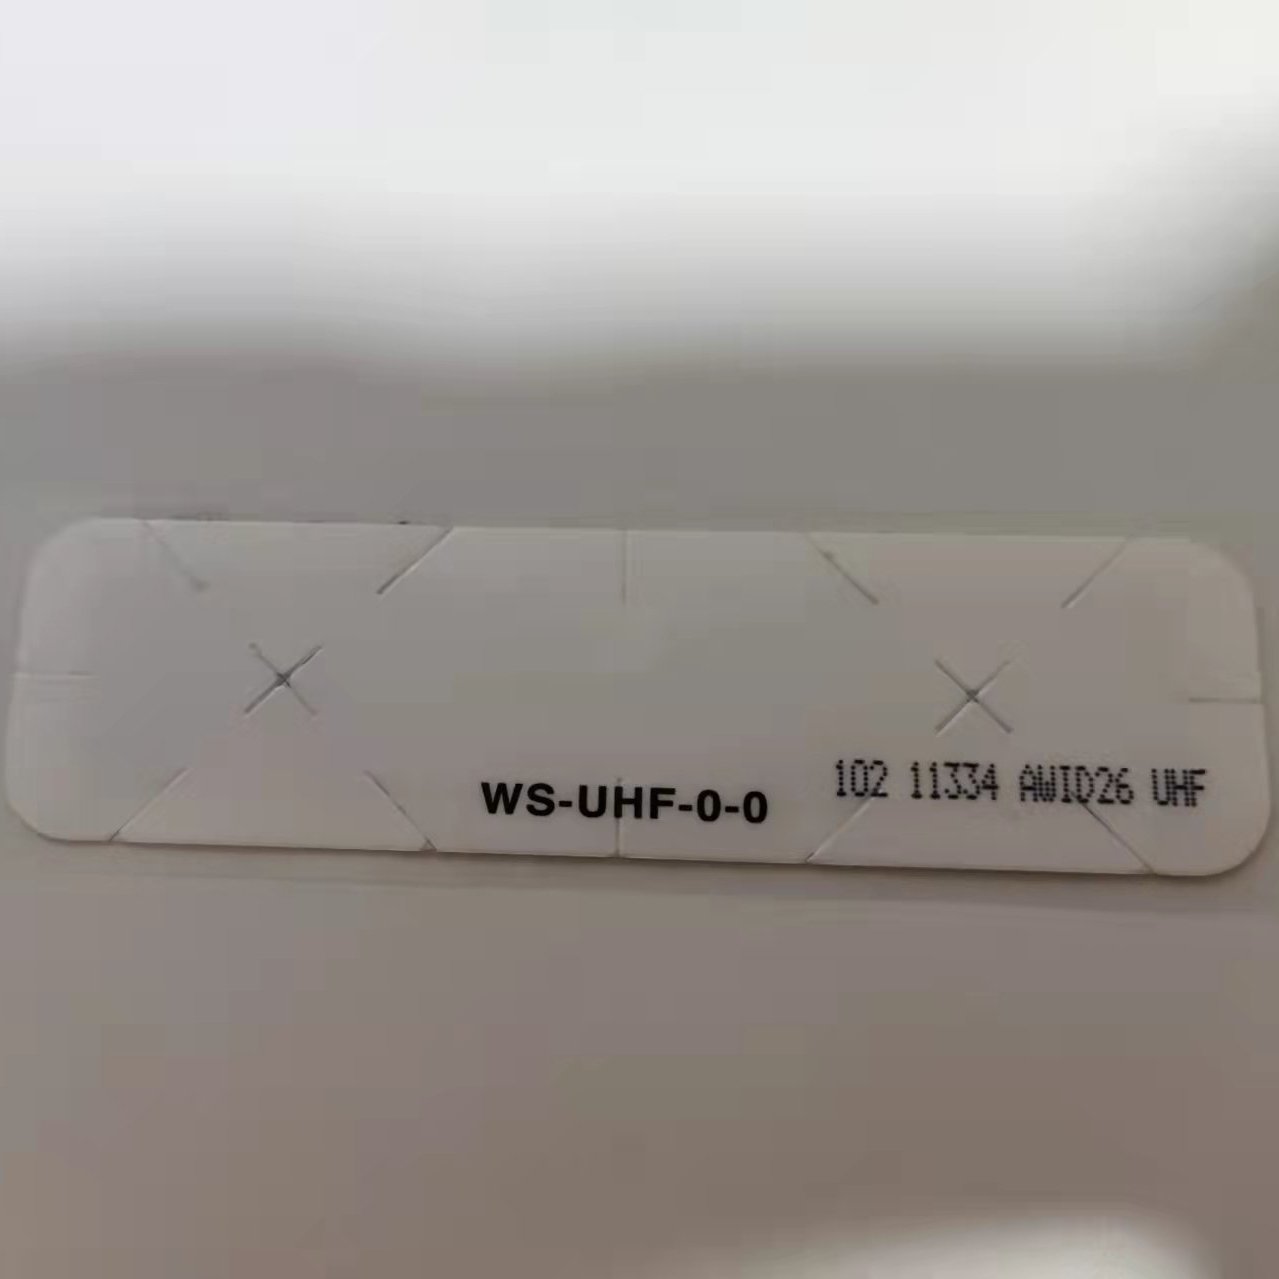 Etiqueta/tarjeta de acceso/etiqueta para parabrisas UHF de AWID WS-UHF-0-0/RV-UHF-0-0